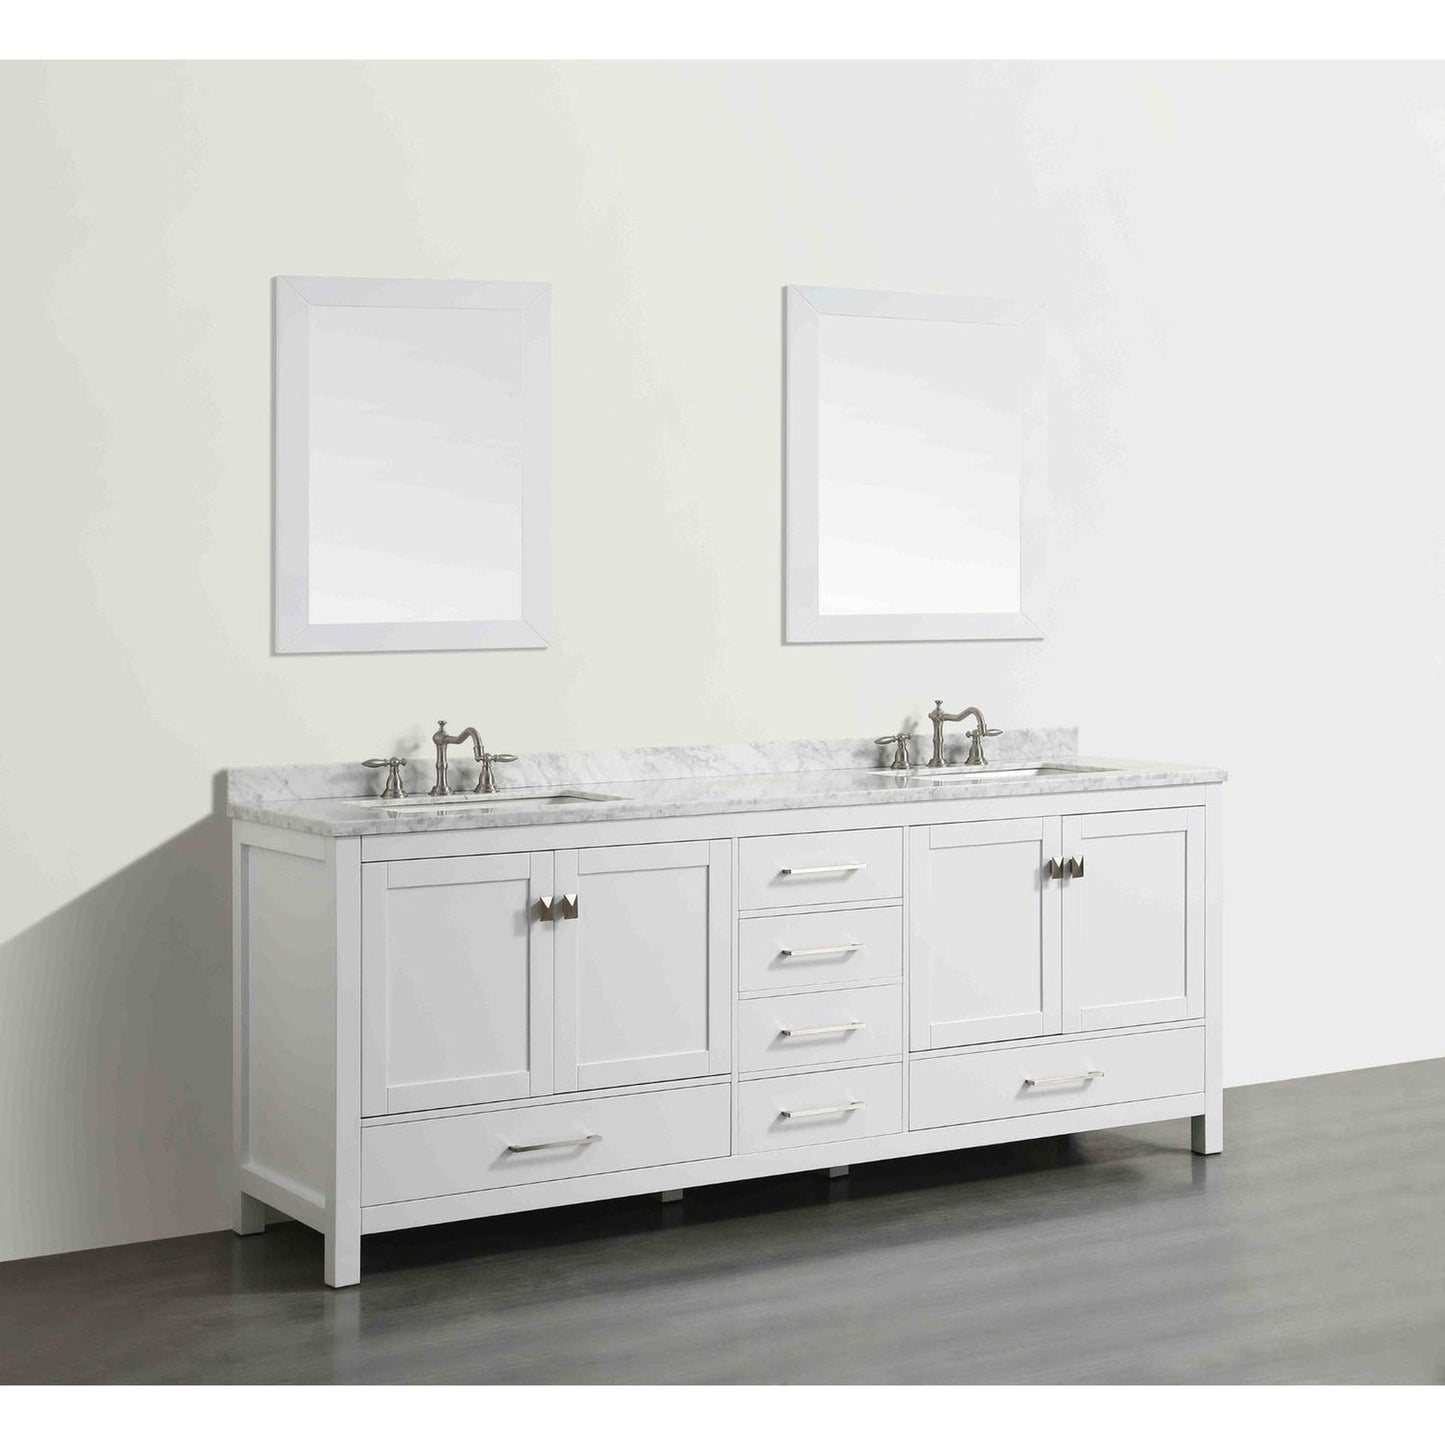 Eviva Aberdeen 78" x 34" White Freestanding Bathroom Vanity With Double Undermount Sink